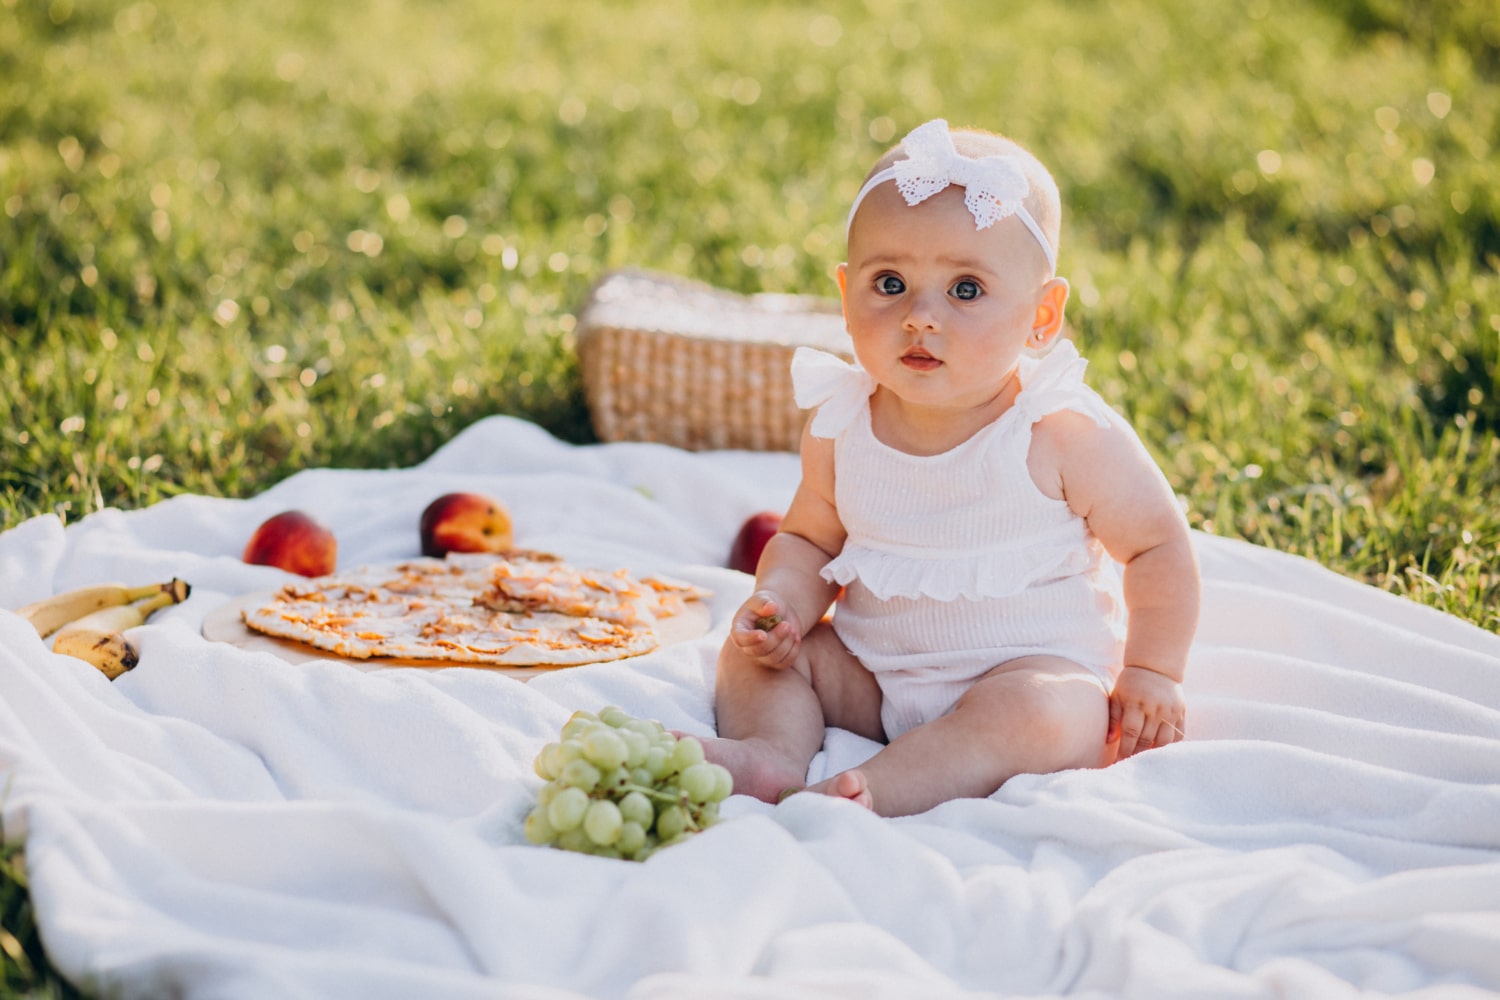 Joyful outdoor picnic-themed newborn baby photoshoot amidst nature